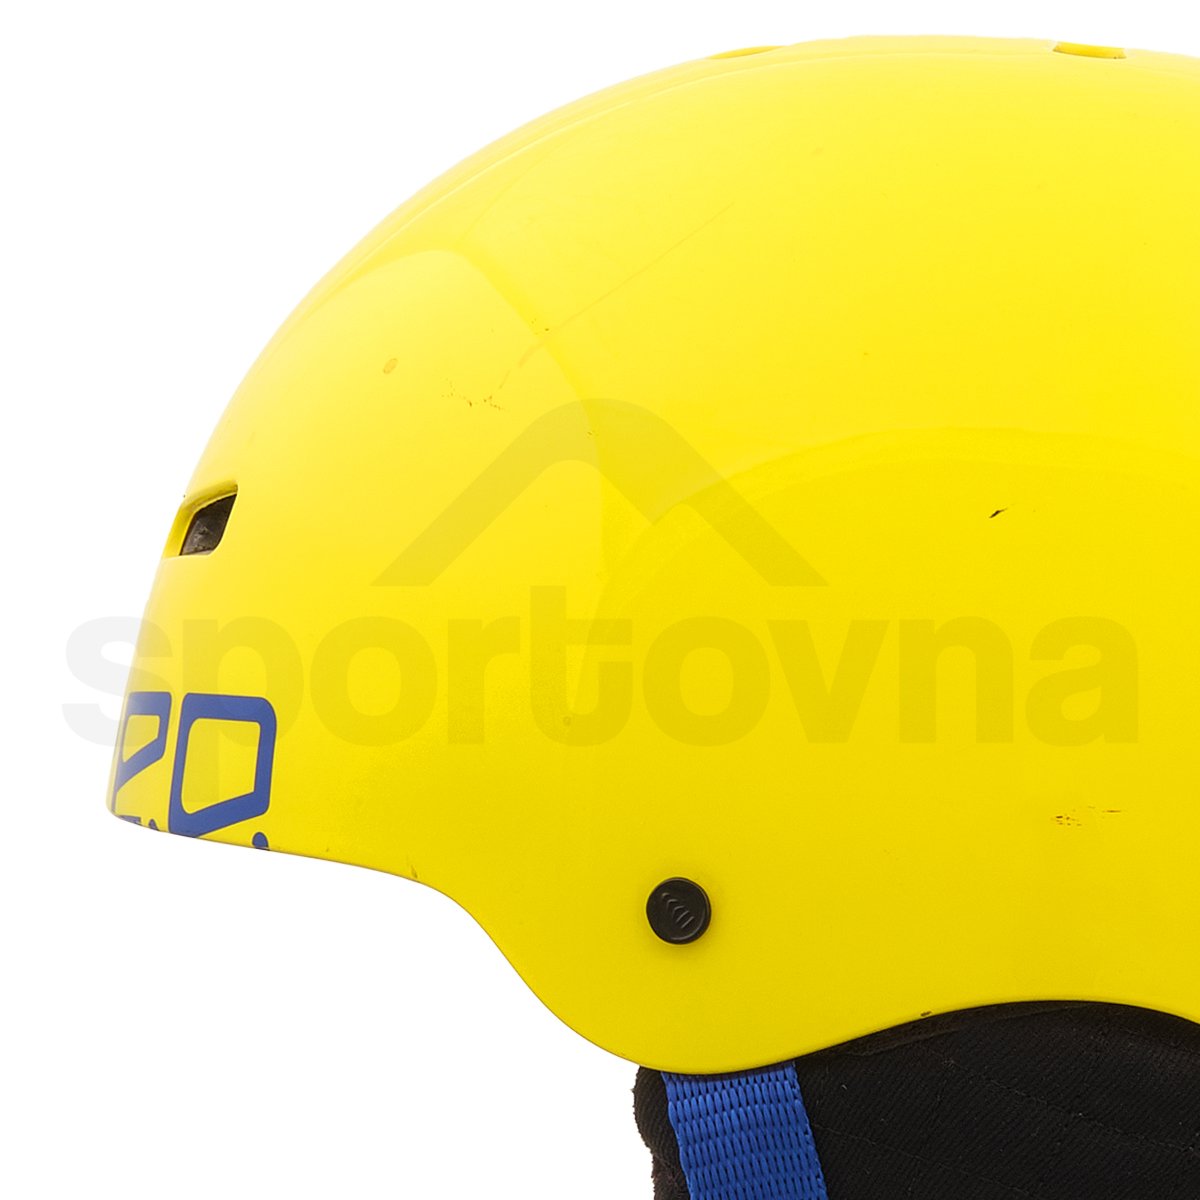 Lyžařská helma Burton Trace Jr - žlutá